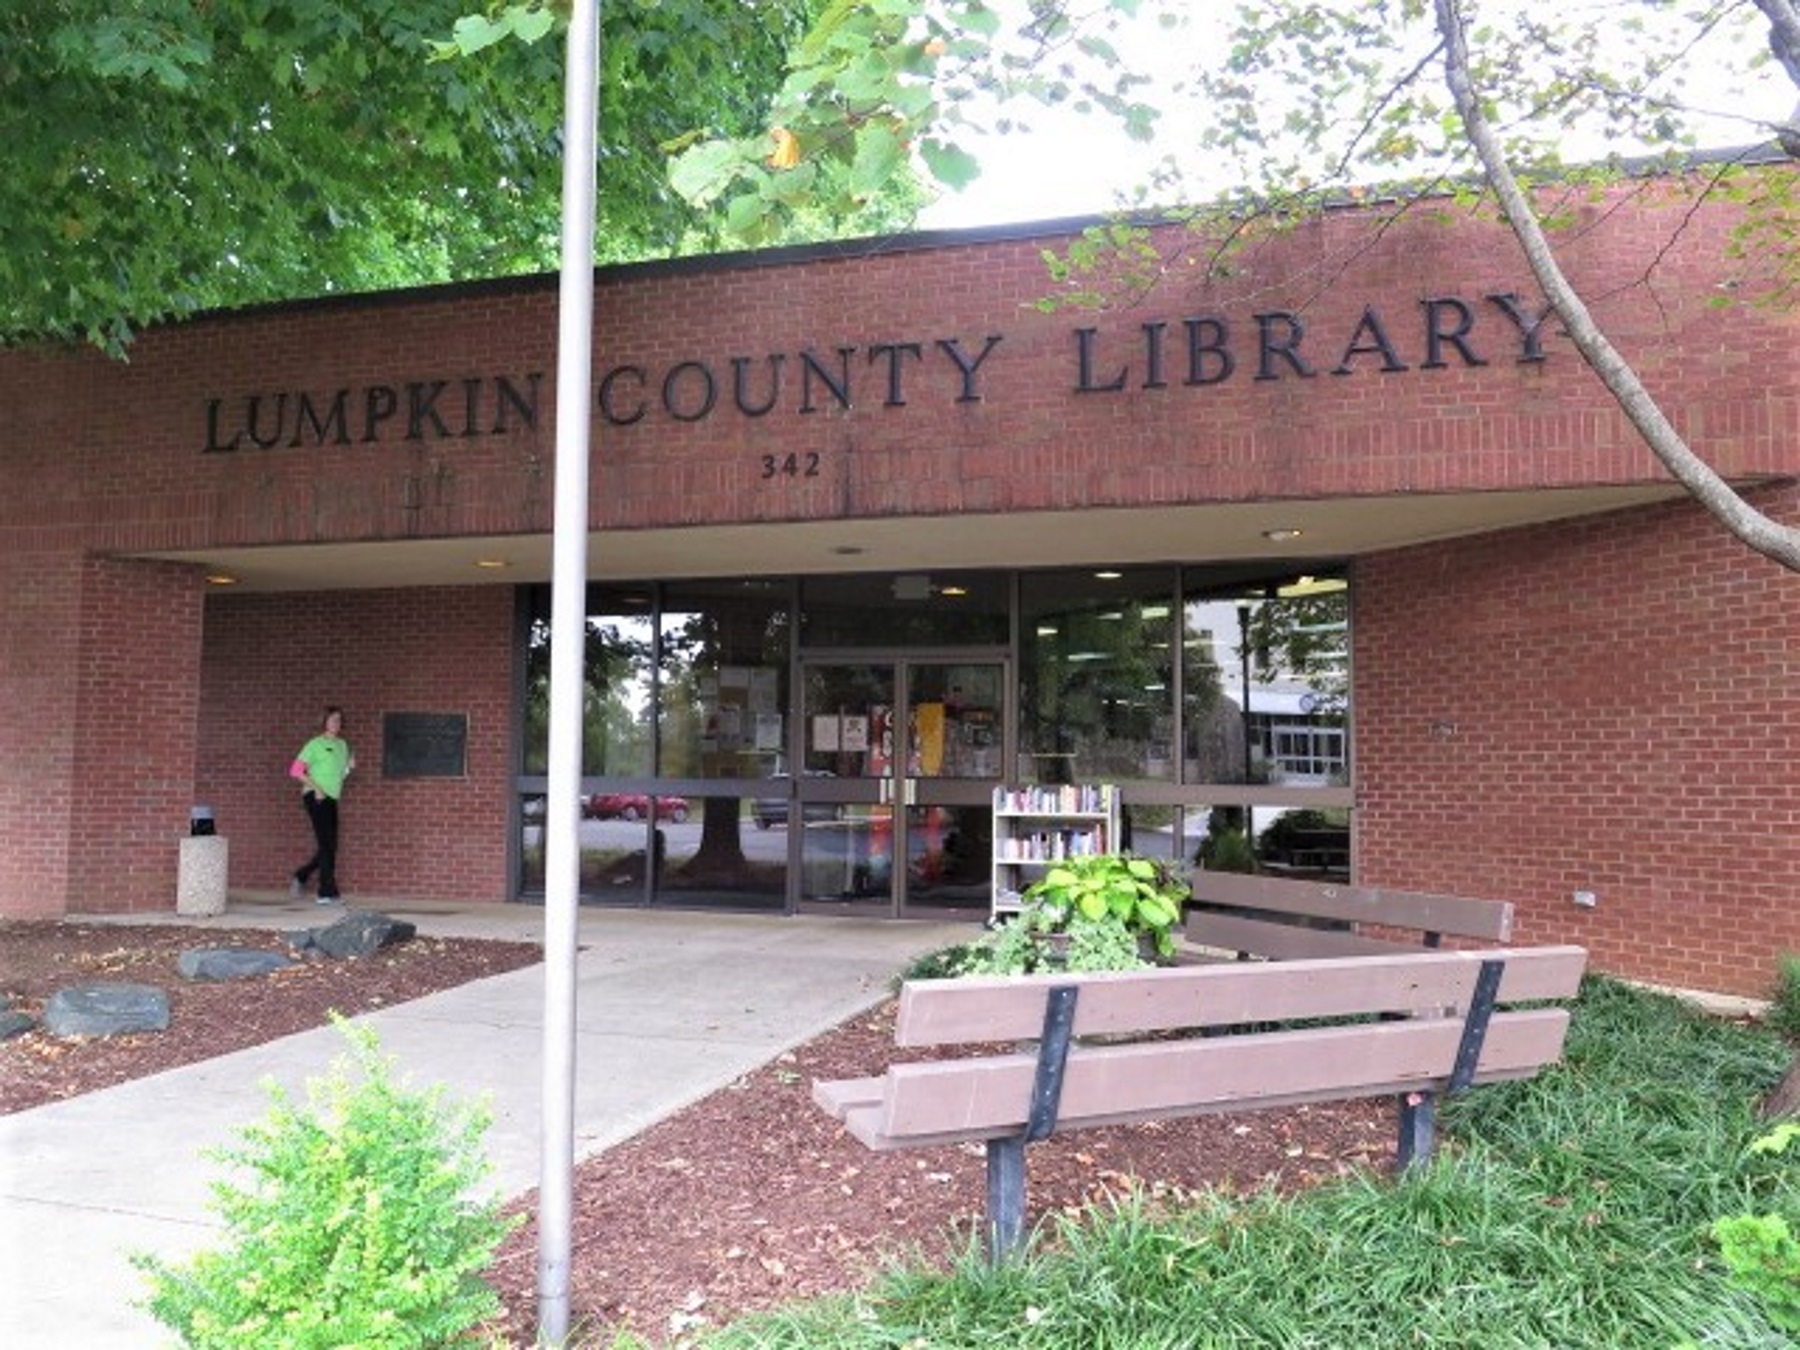 Lumpkin County Library